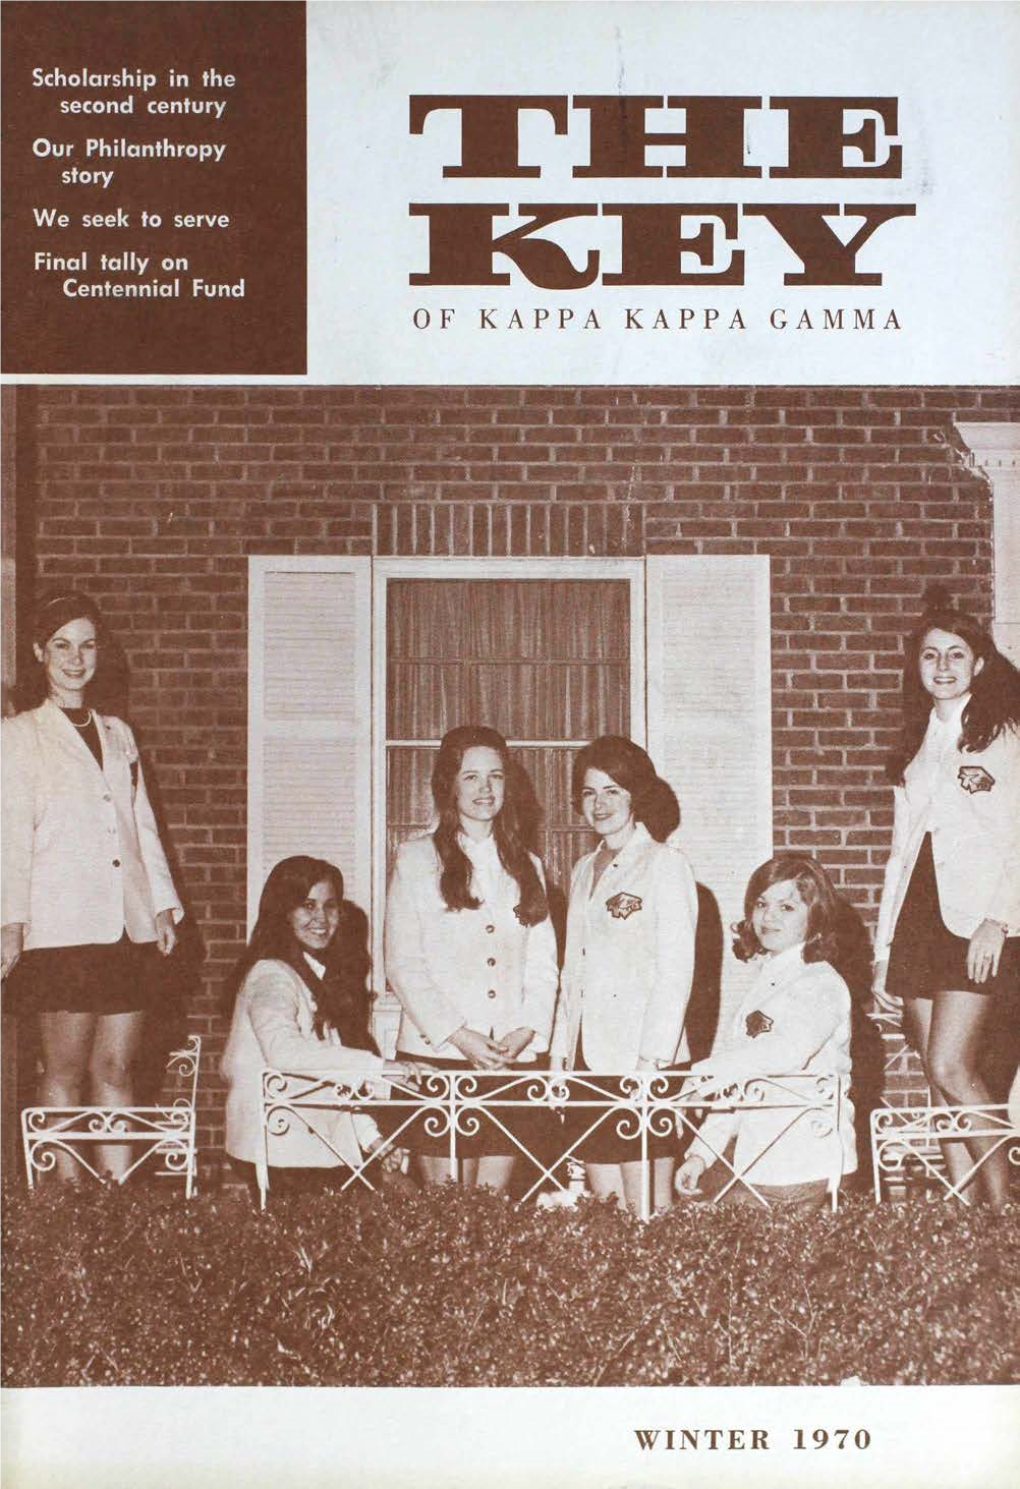 Of Kappa Kappa Gamma Winter 1970